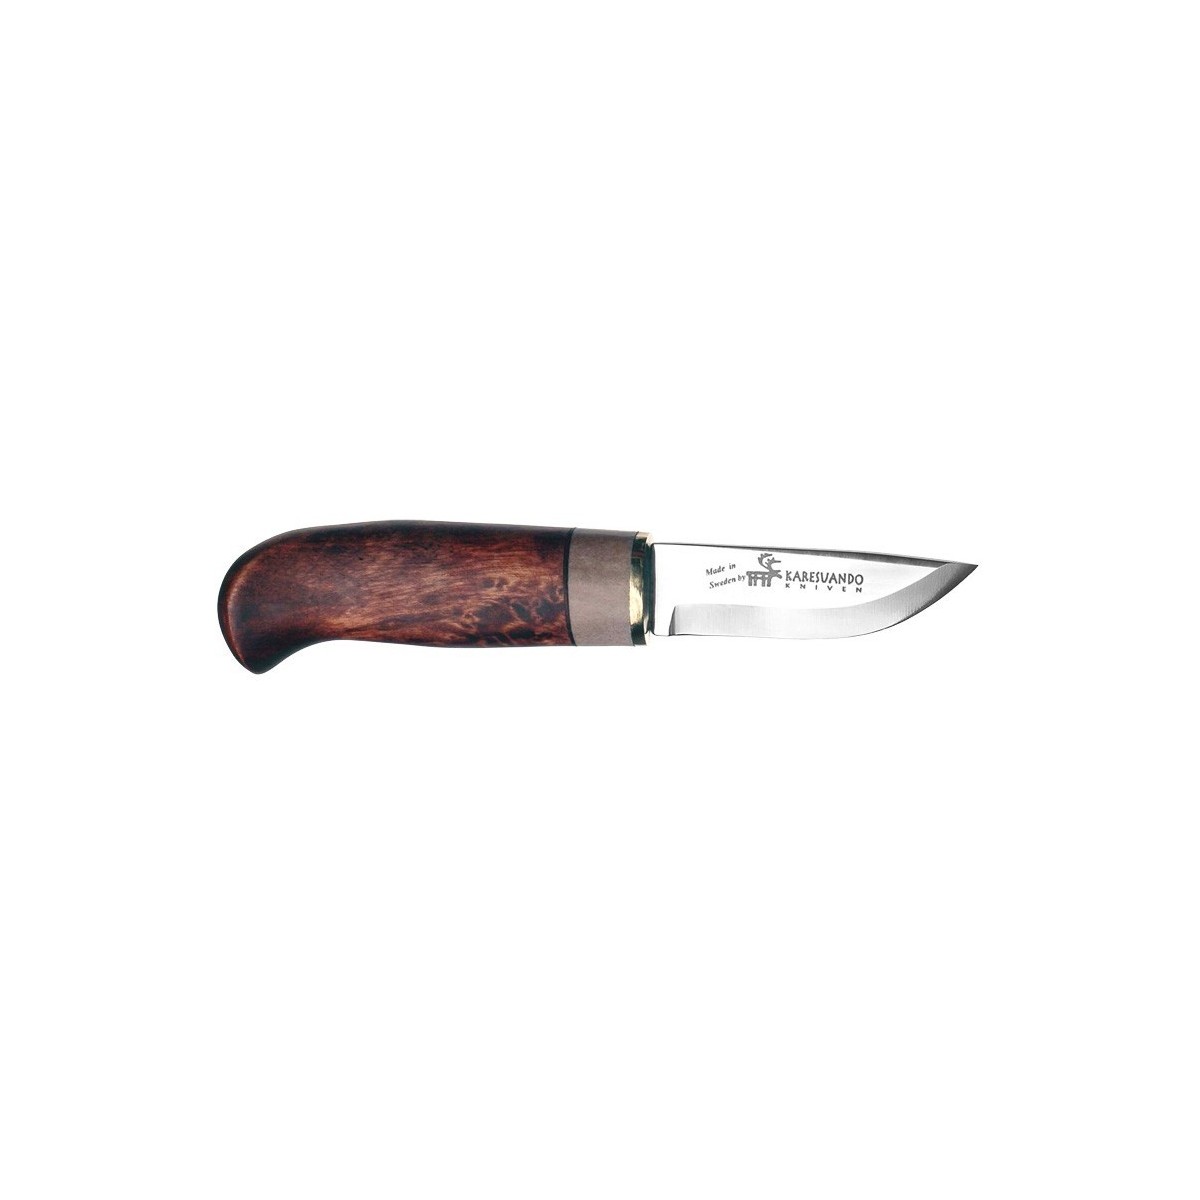 Giron knife